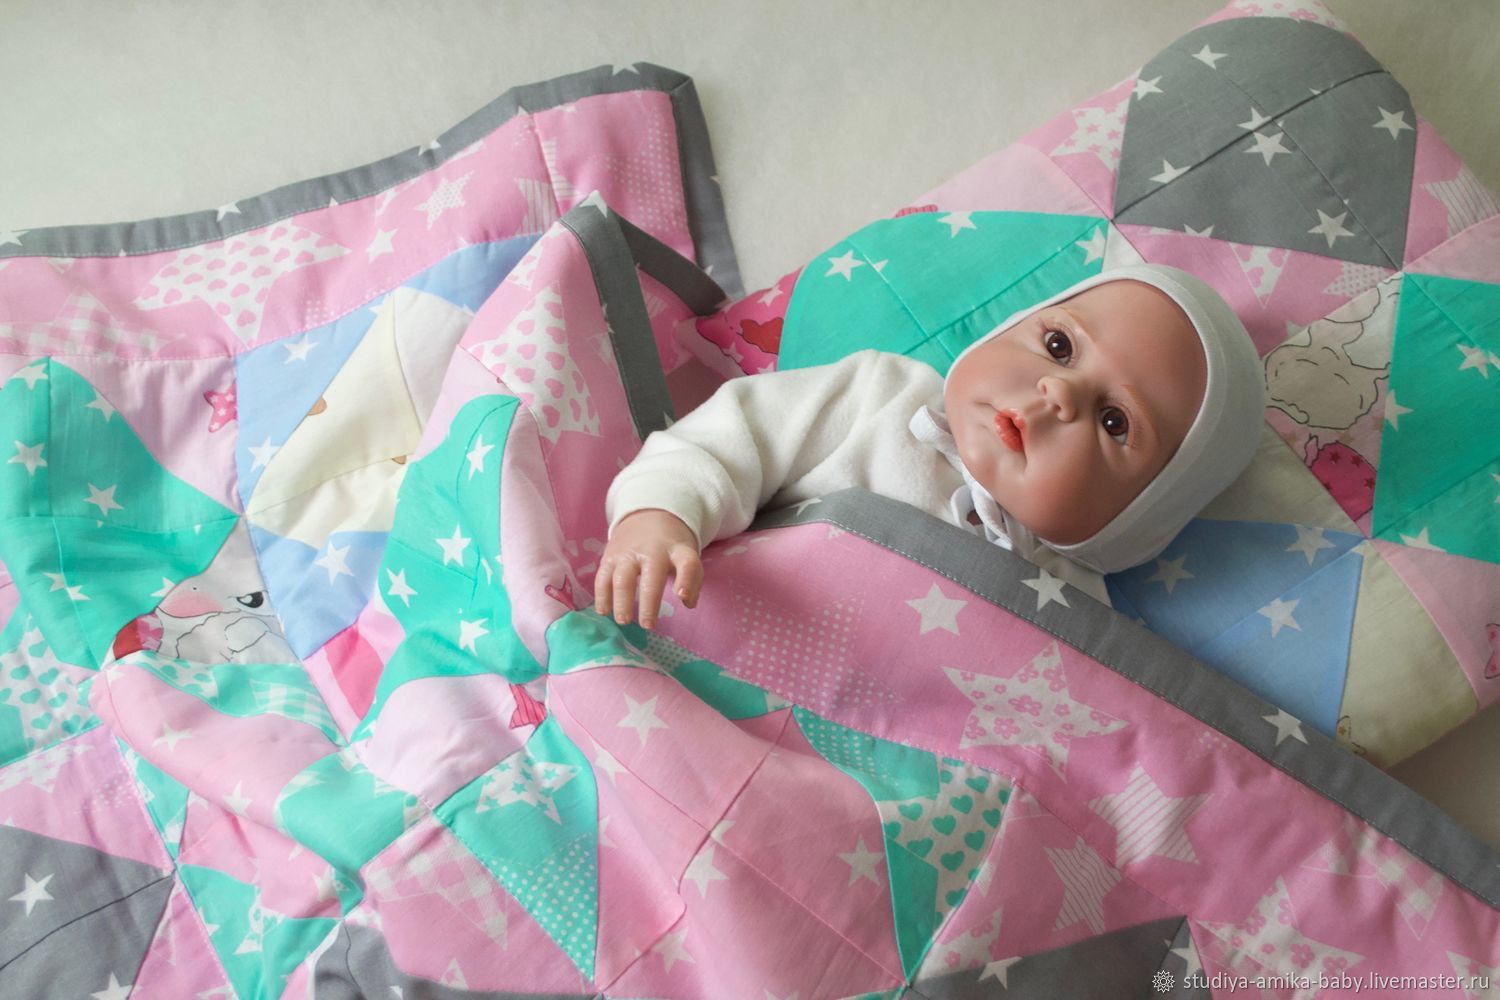 Blanket baby